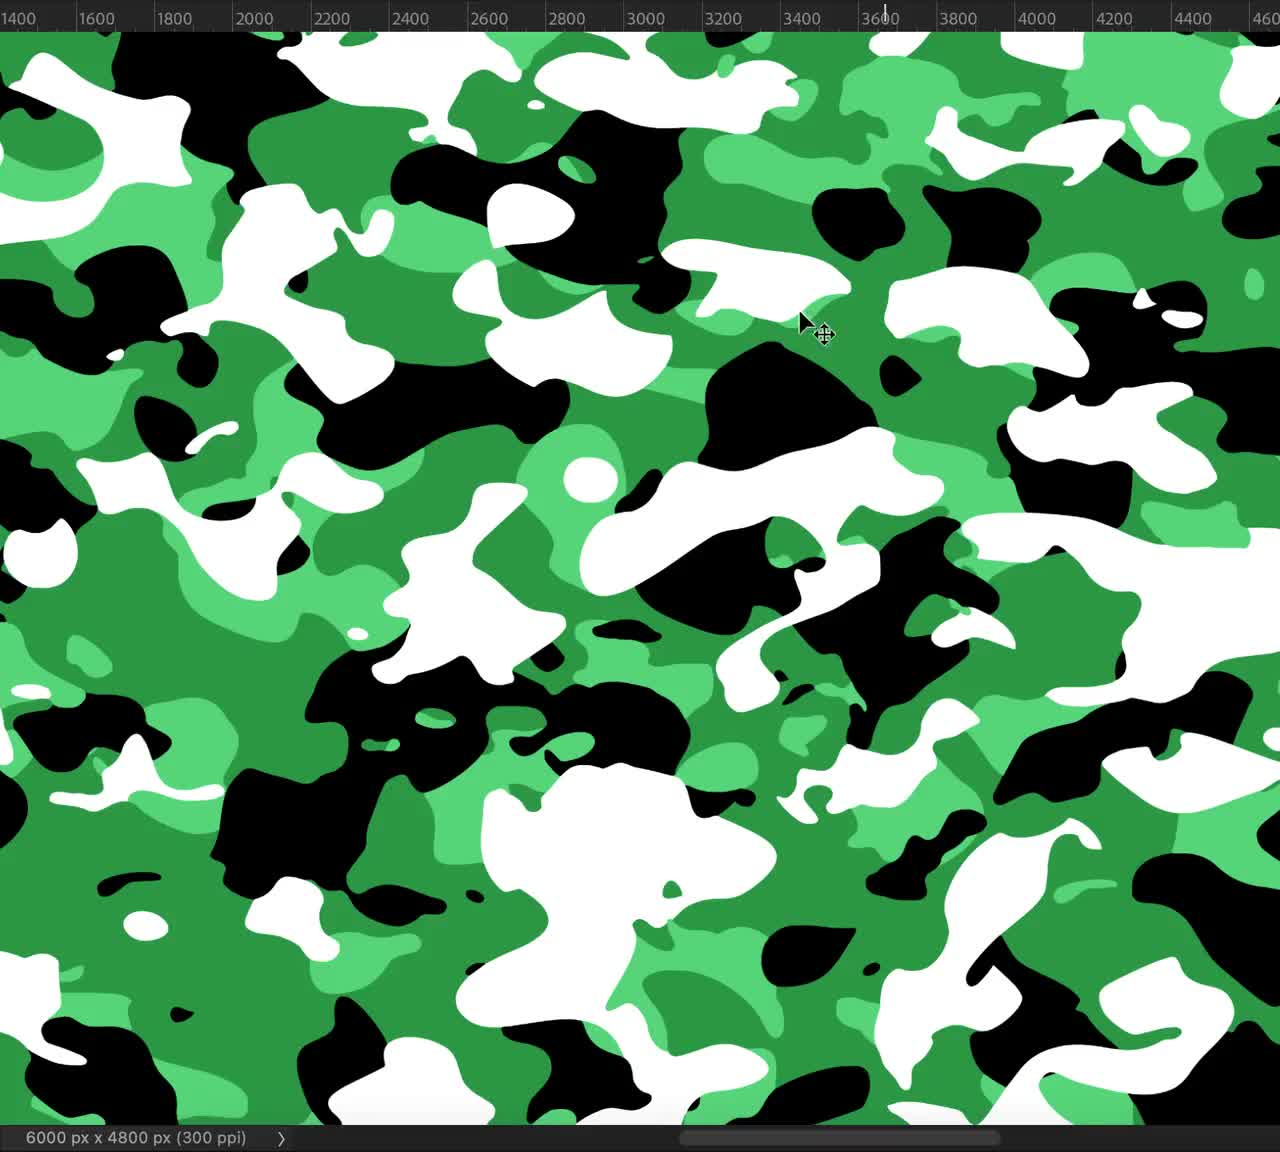 Green Camouflage Seamless Digital Background Pattern Digital